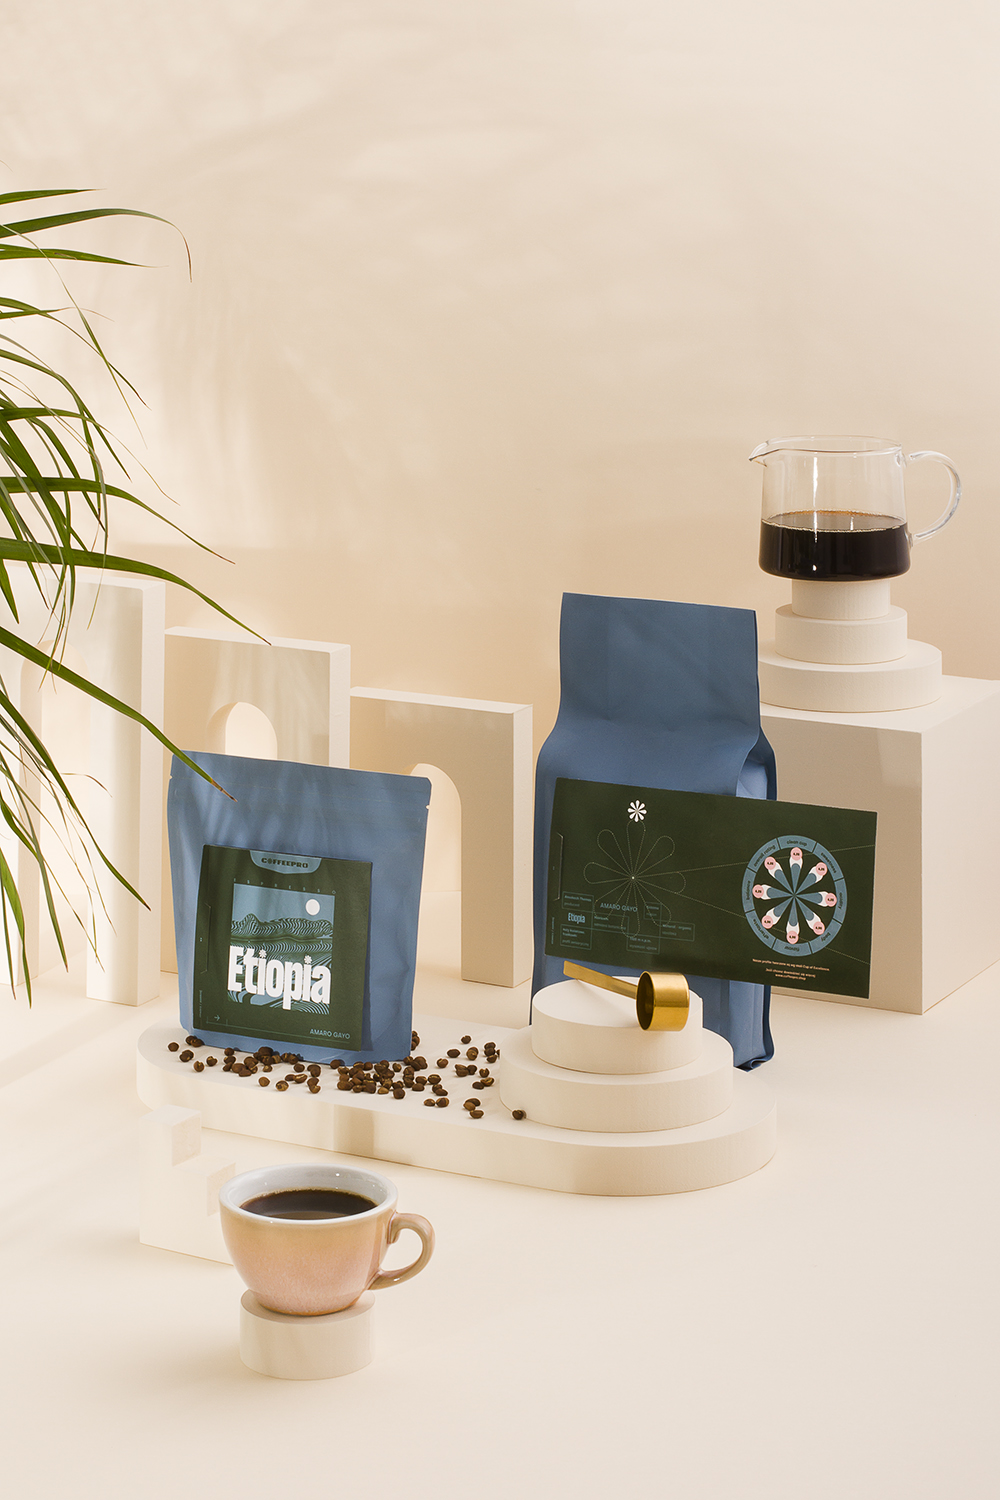 Coffeepro Rebranding Based on Polish Traditions Created by Illcat.studio